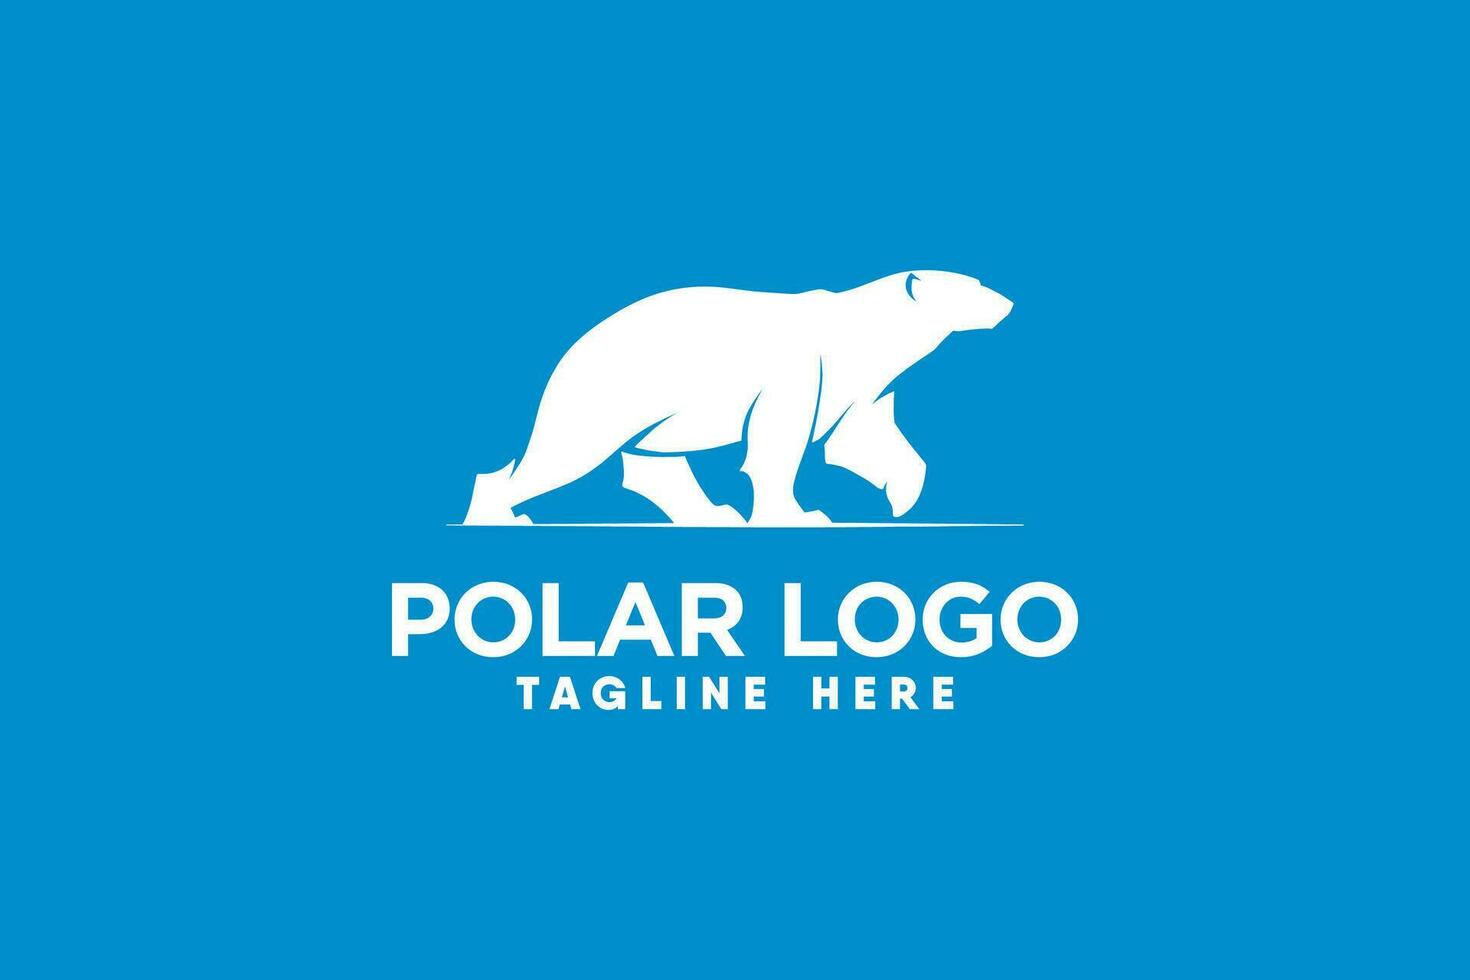 corriendo polar oso logo vector con moderno y limpiar silueta estilo